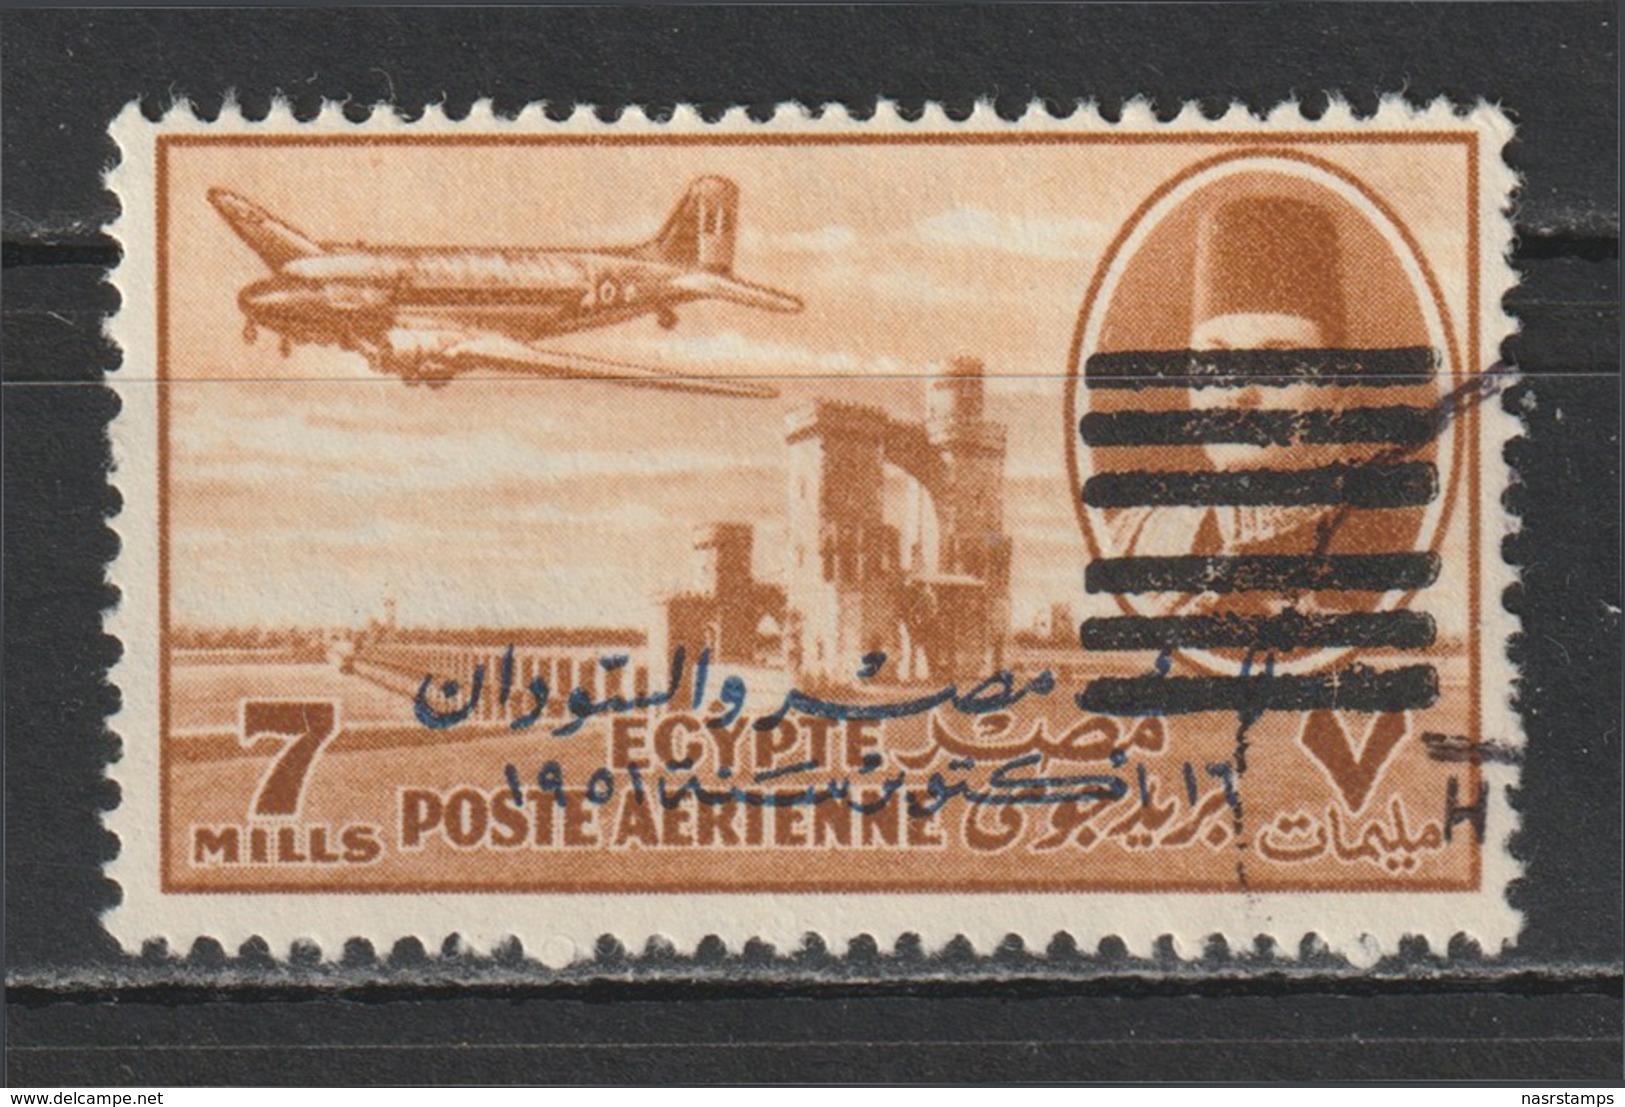 Egypt - 1953 - Unlisted - Unrecorded - Scarce - ( King Farouk - Overprinted 6 Bars On M/s - 7m  ) - Used - No Gum - Gebruikt